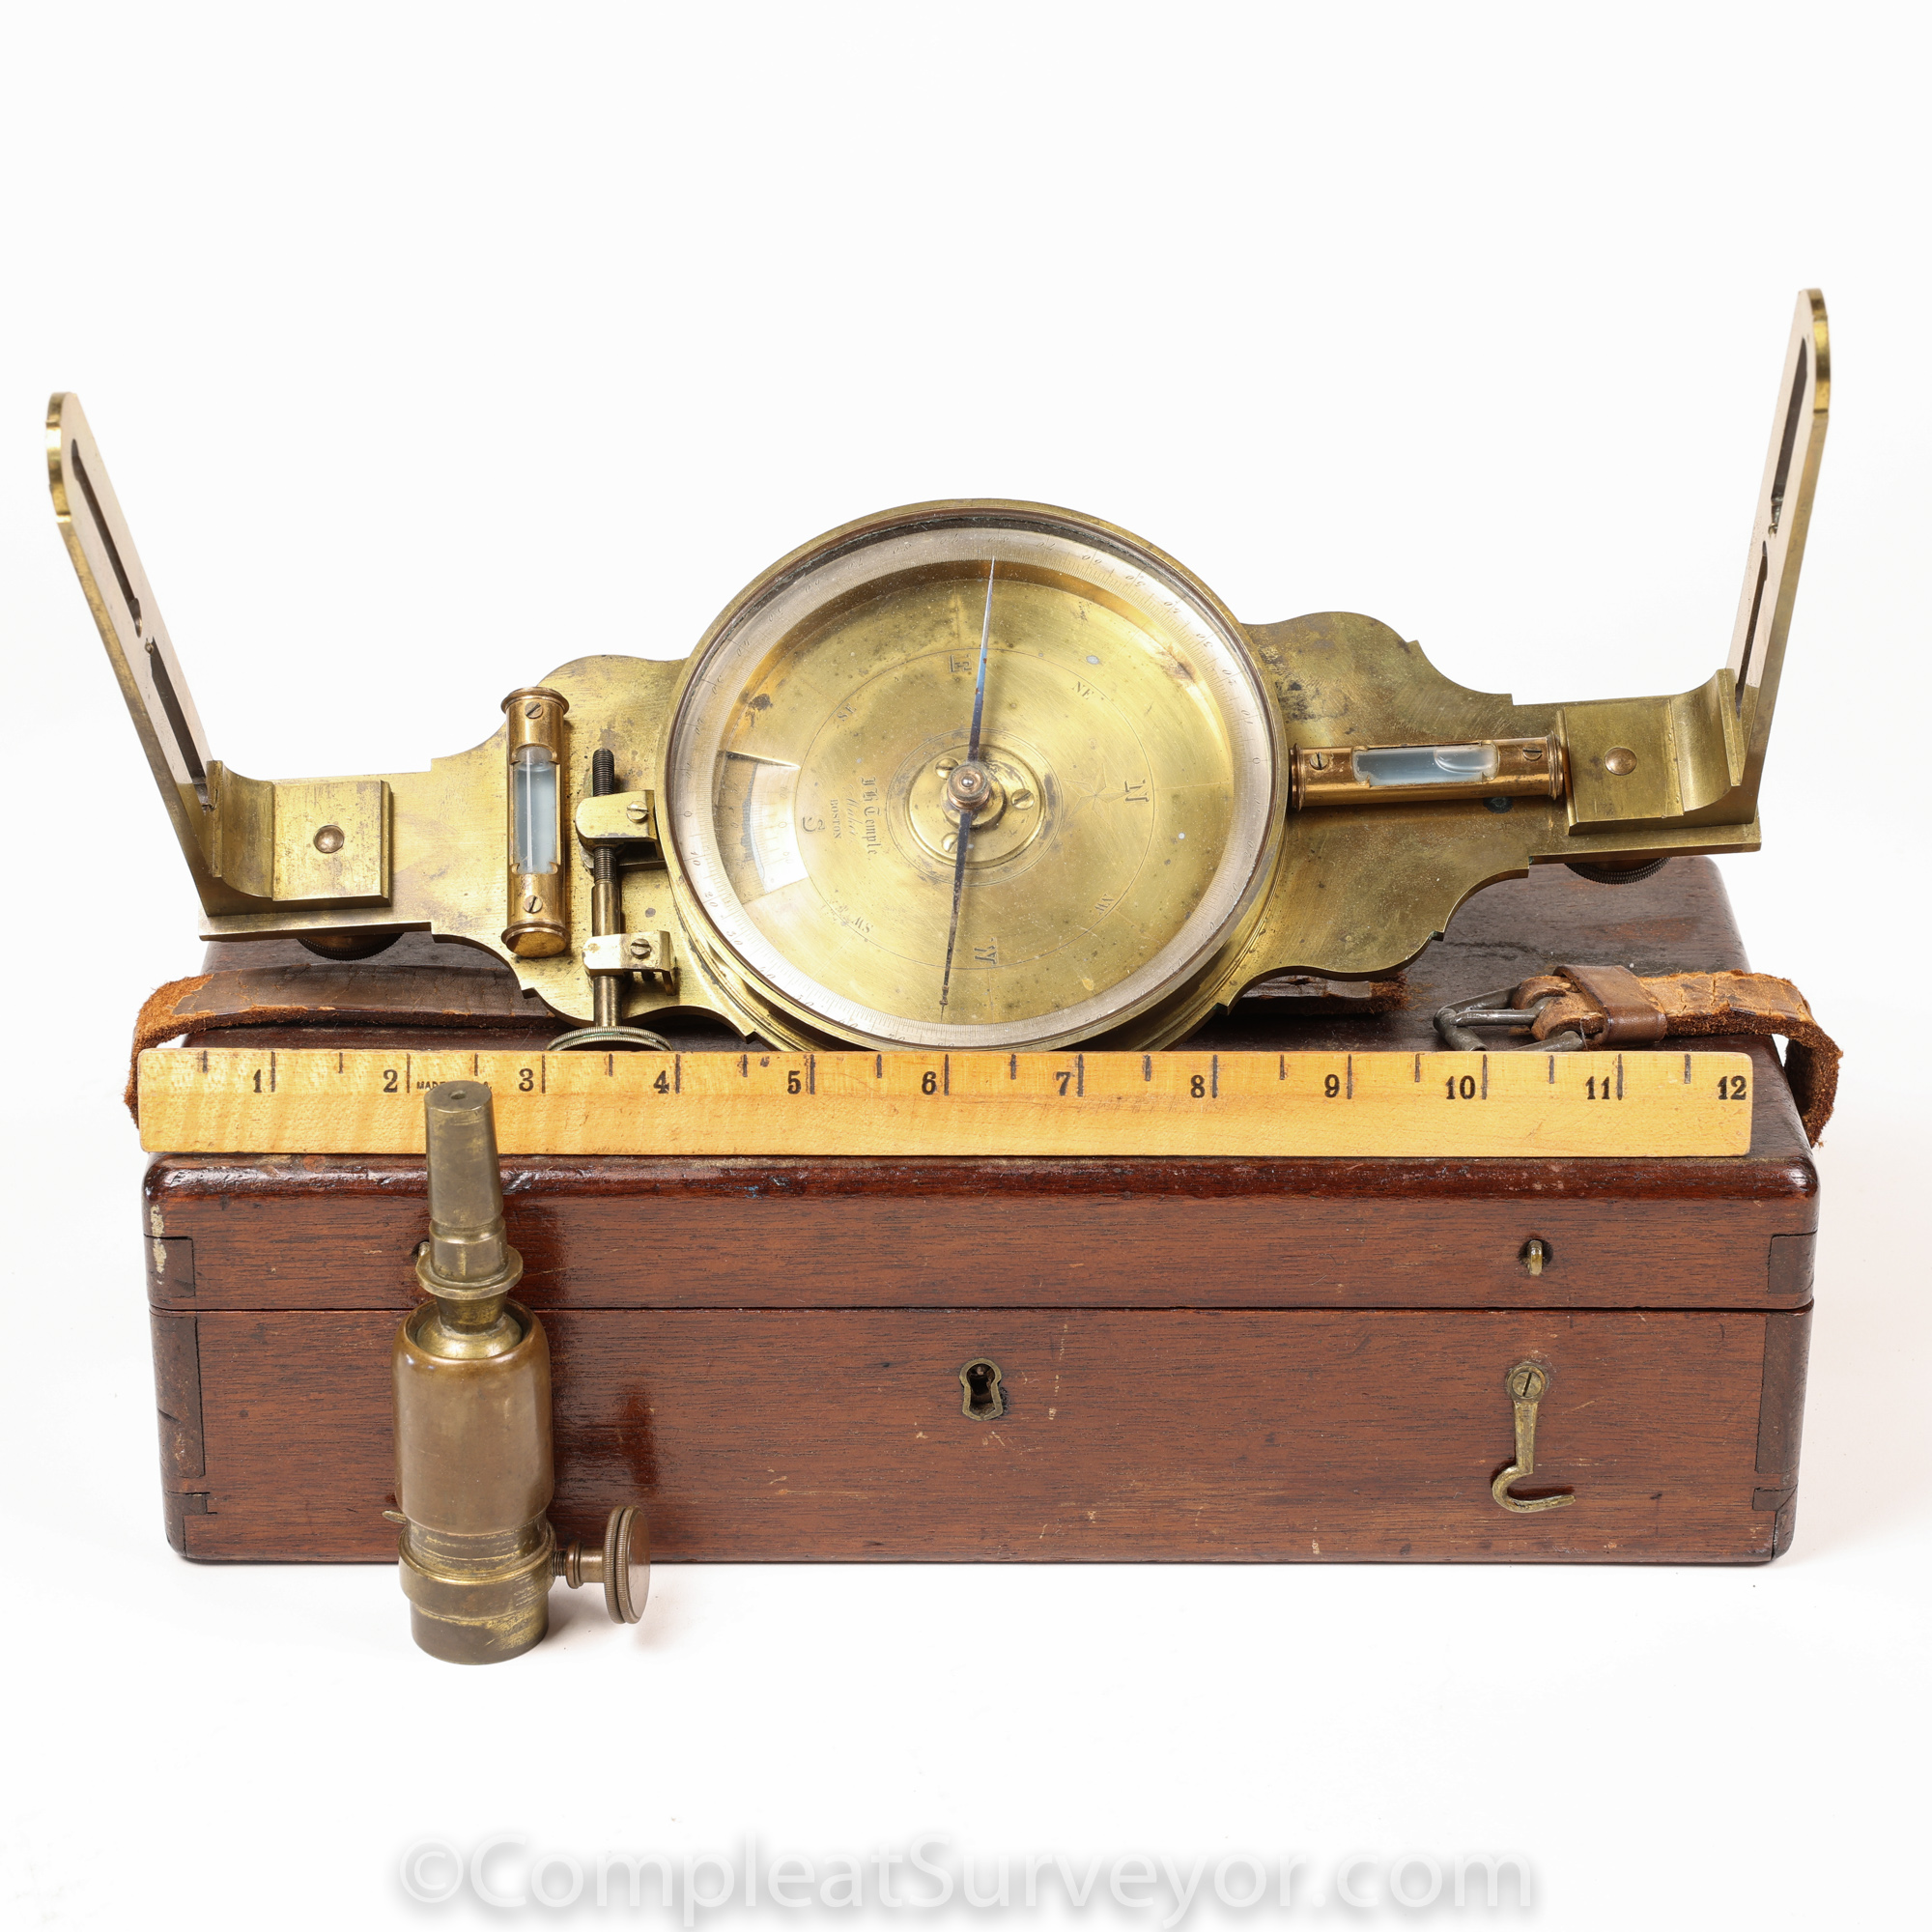 Wonderful John Temple Small Surveyors Compass – Circa 1850